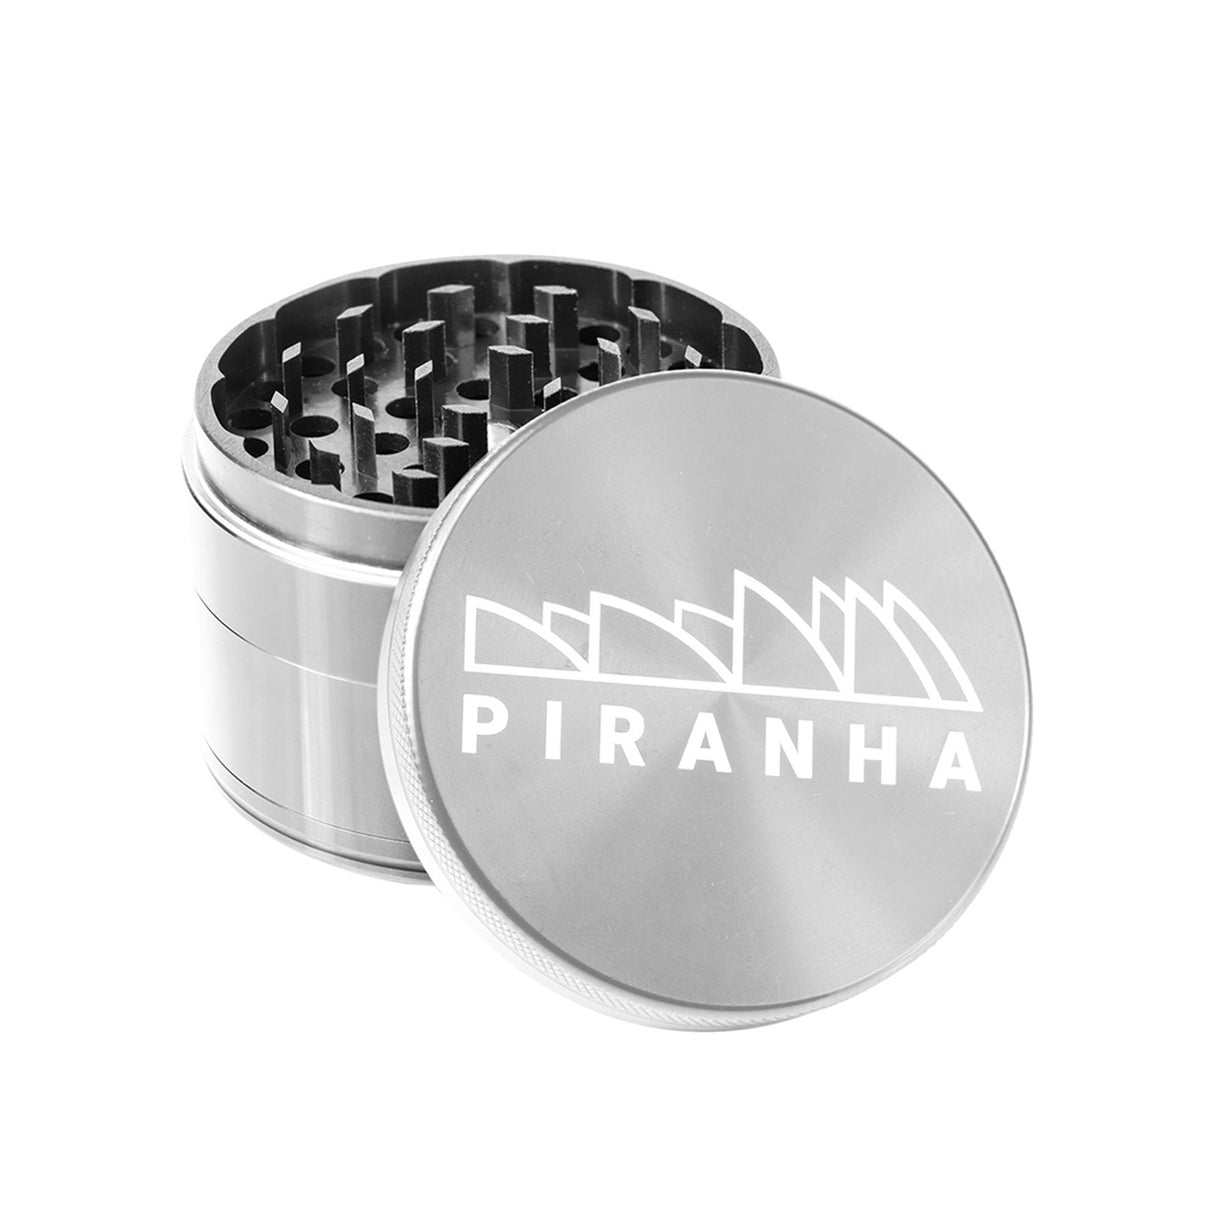 Piranha 4 Piece Aluminum Grinder - 2.2 Inch